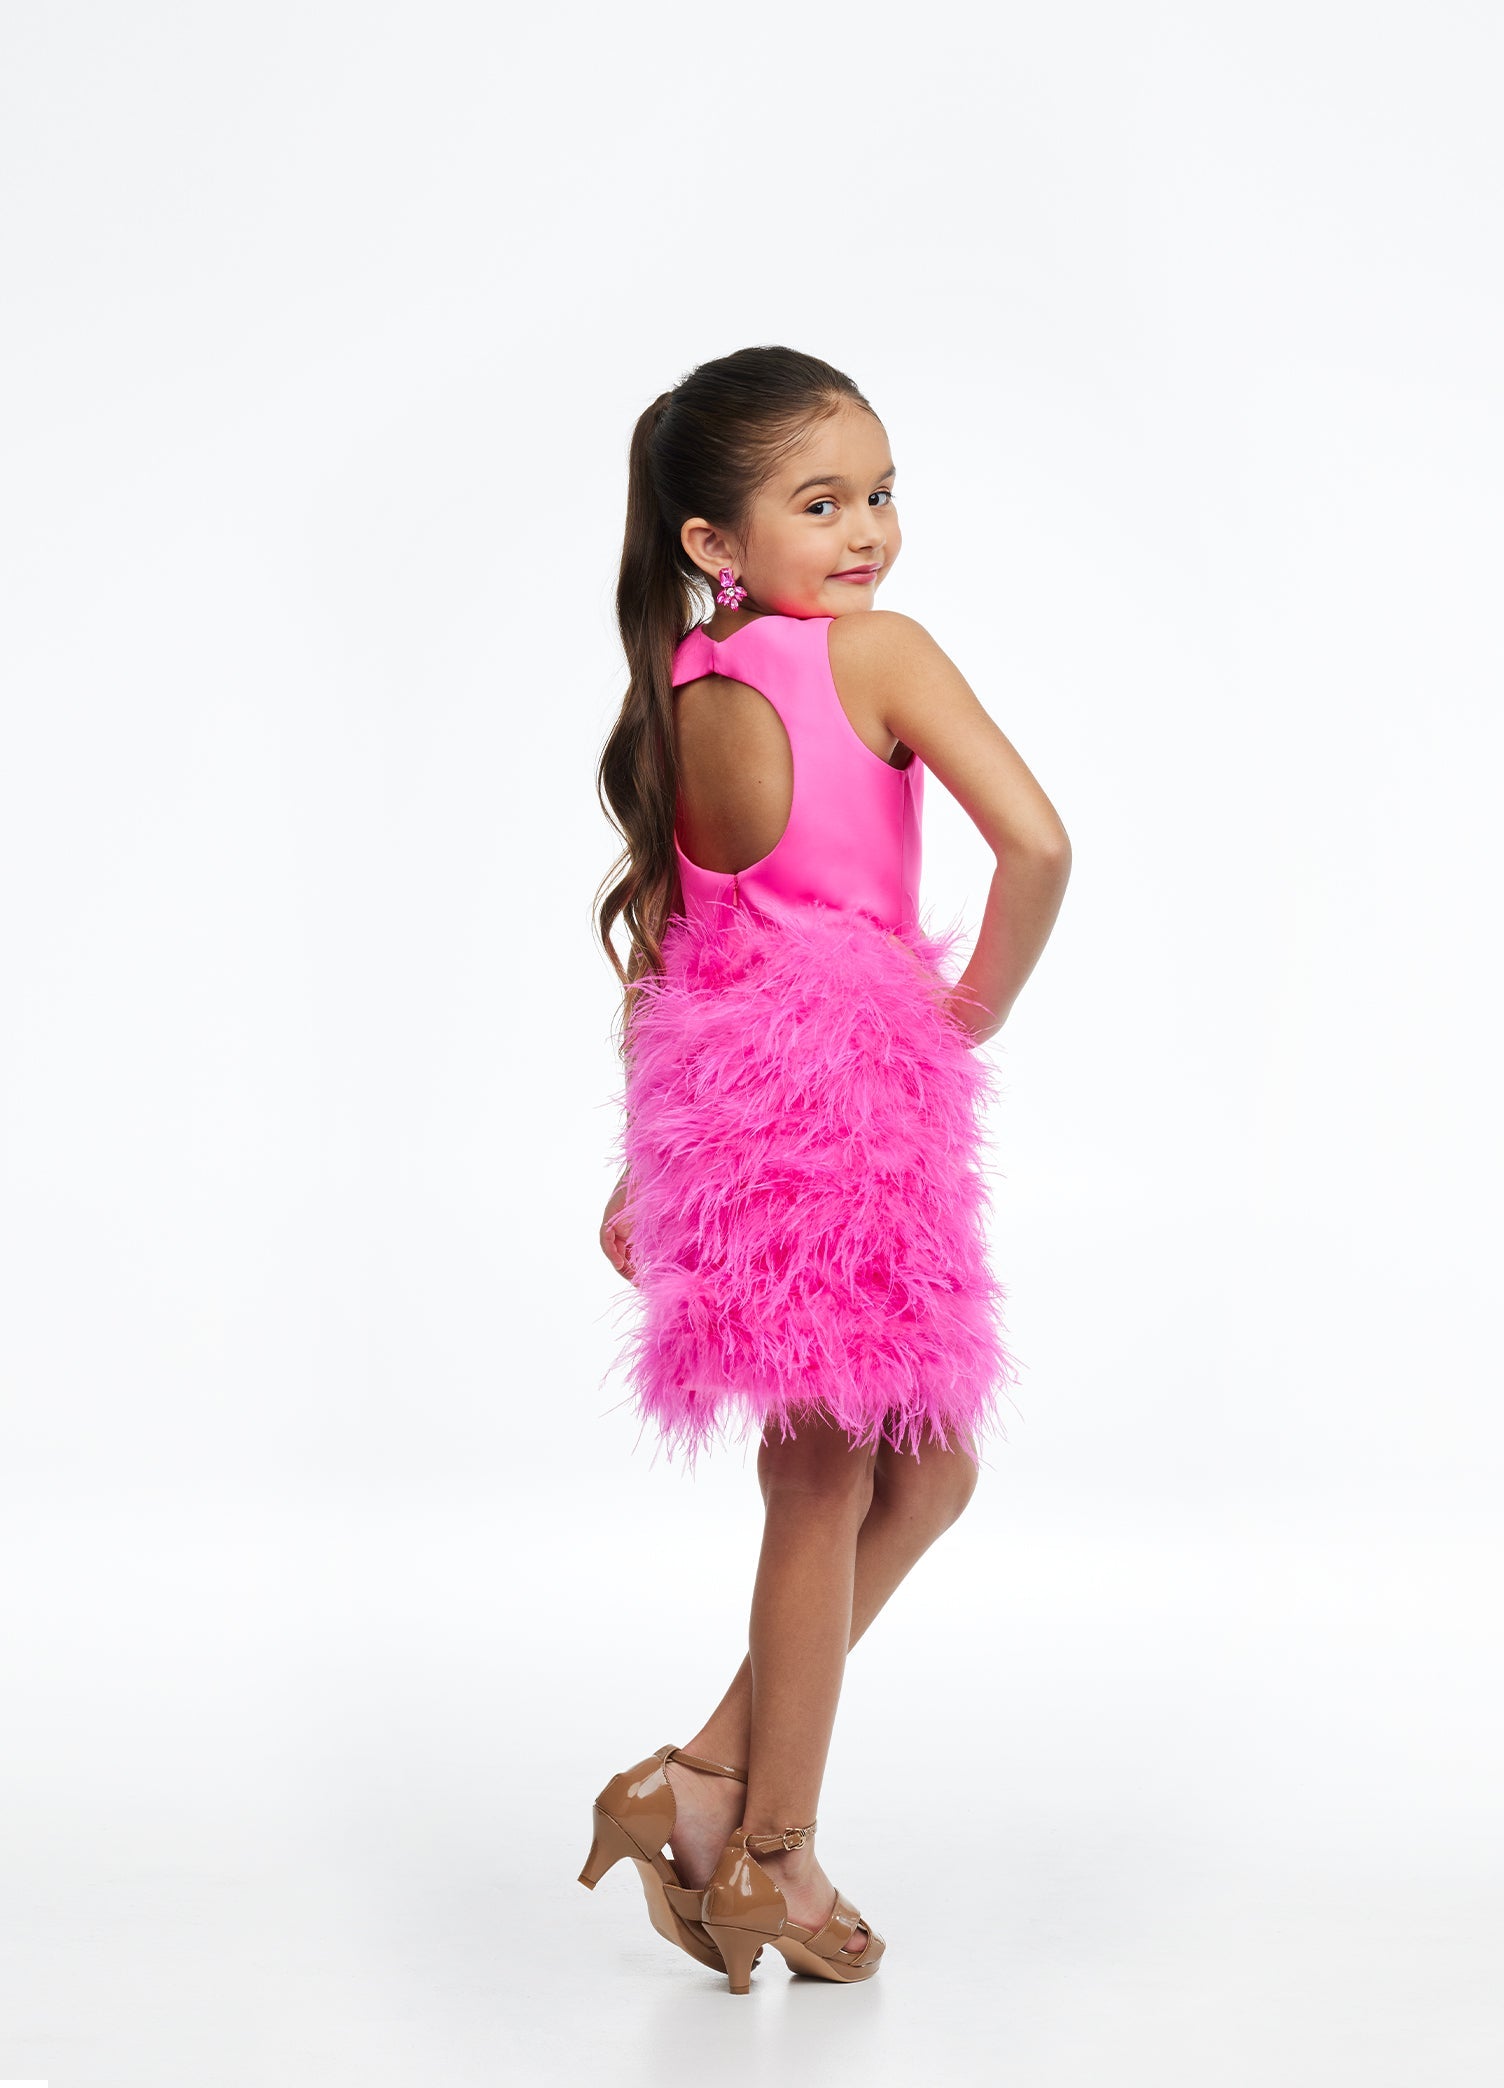 Ashley Lauren Kids 8132 Size 2 Hot Pink girls cocktail dress short